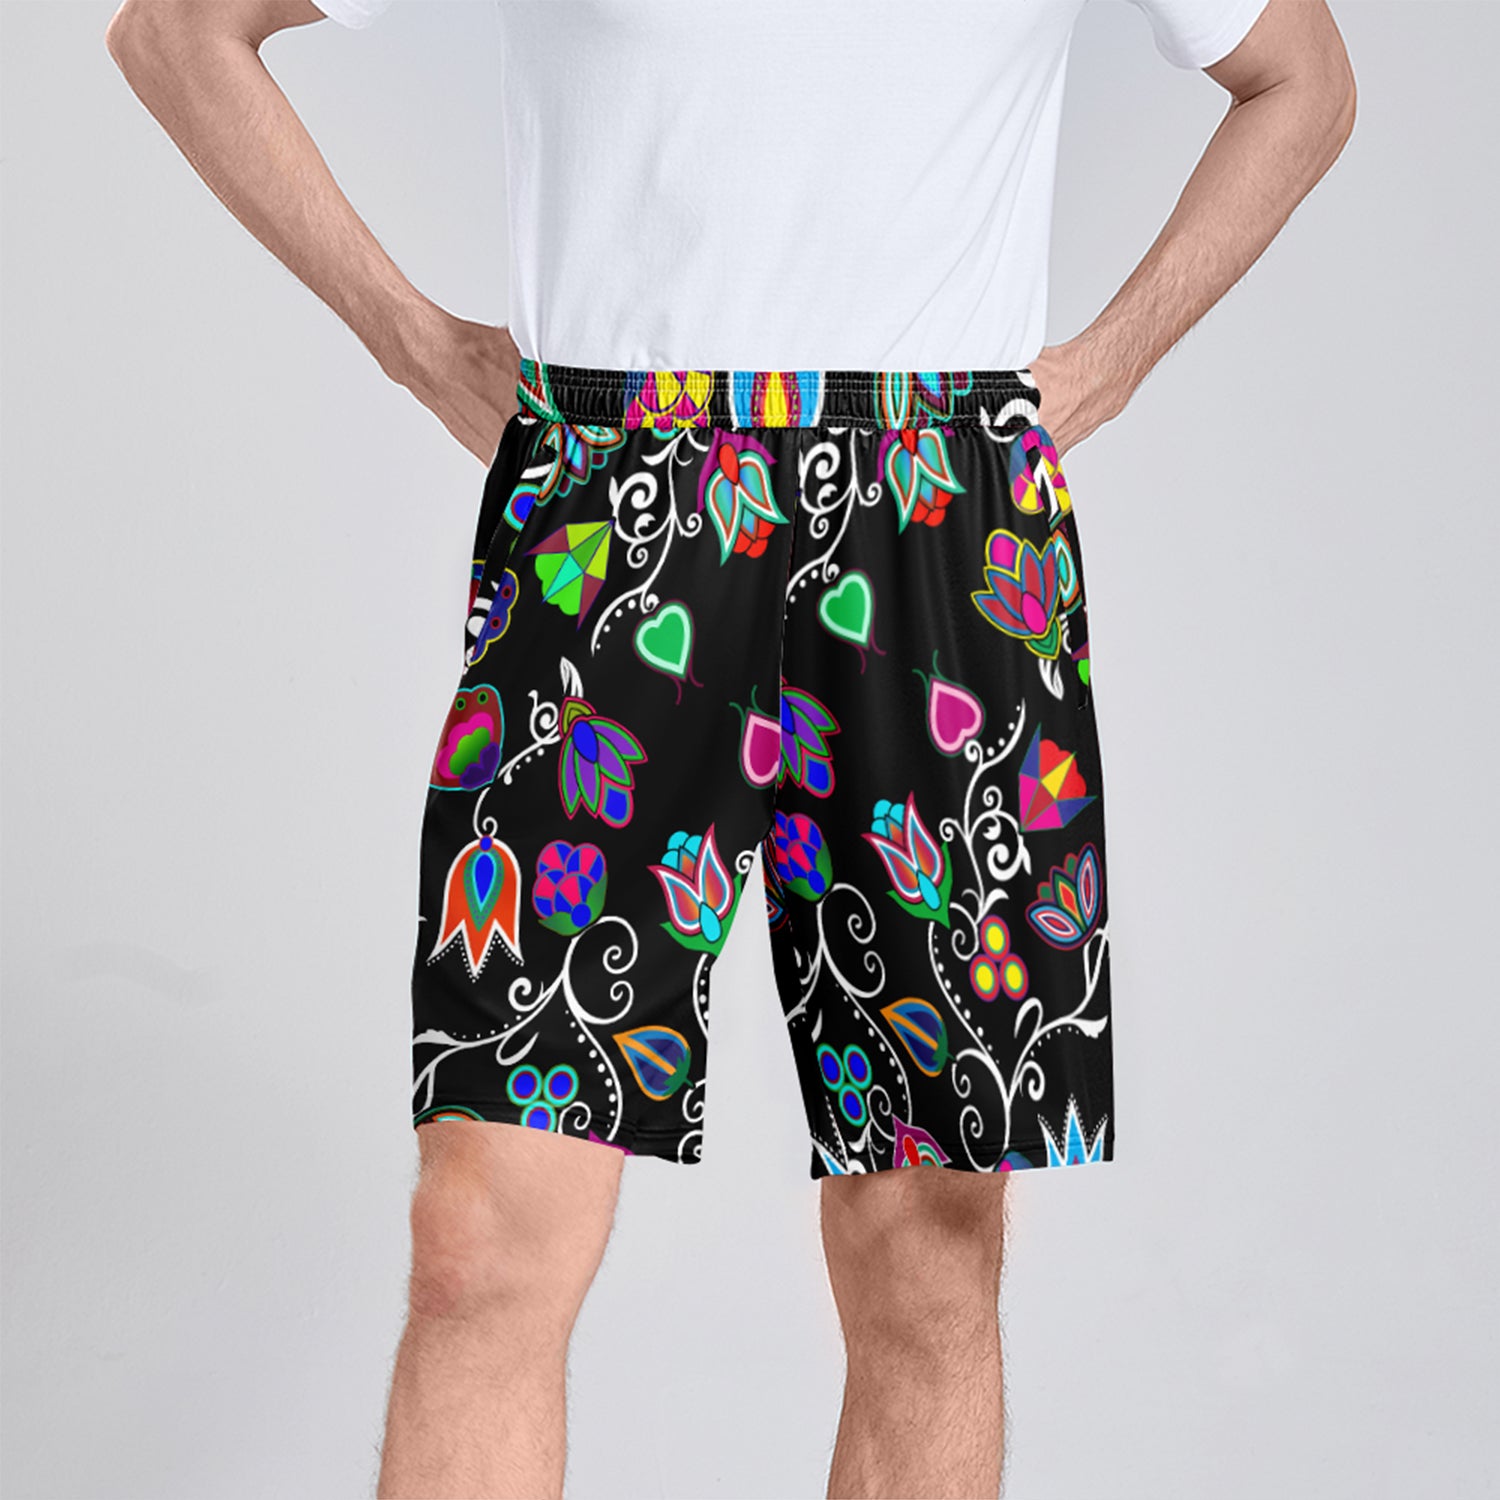 Indigenous Paisley Black Athletic Shorts with Pockets